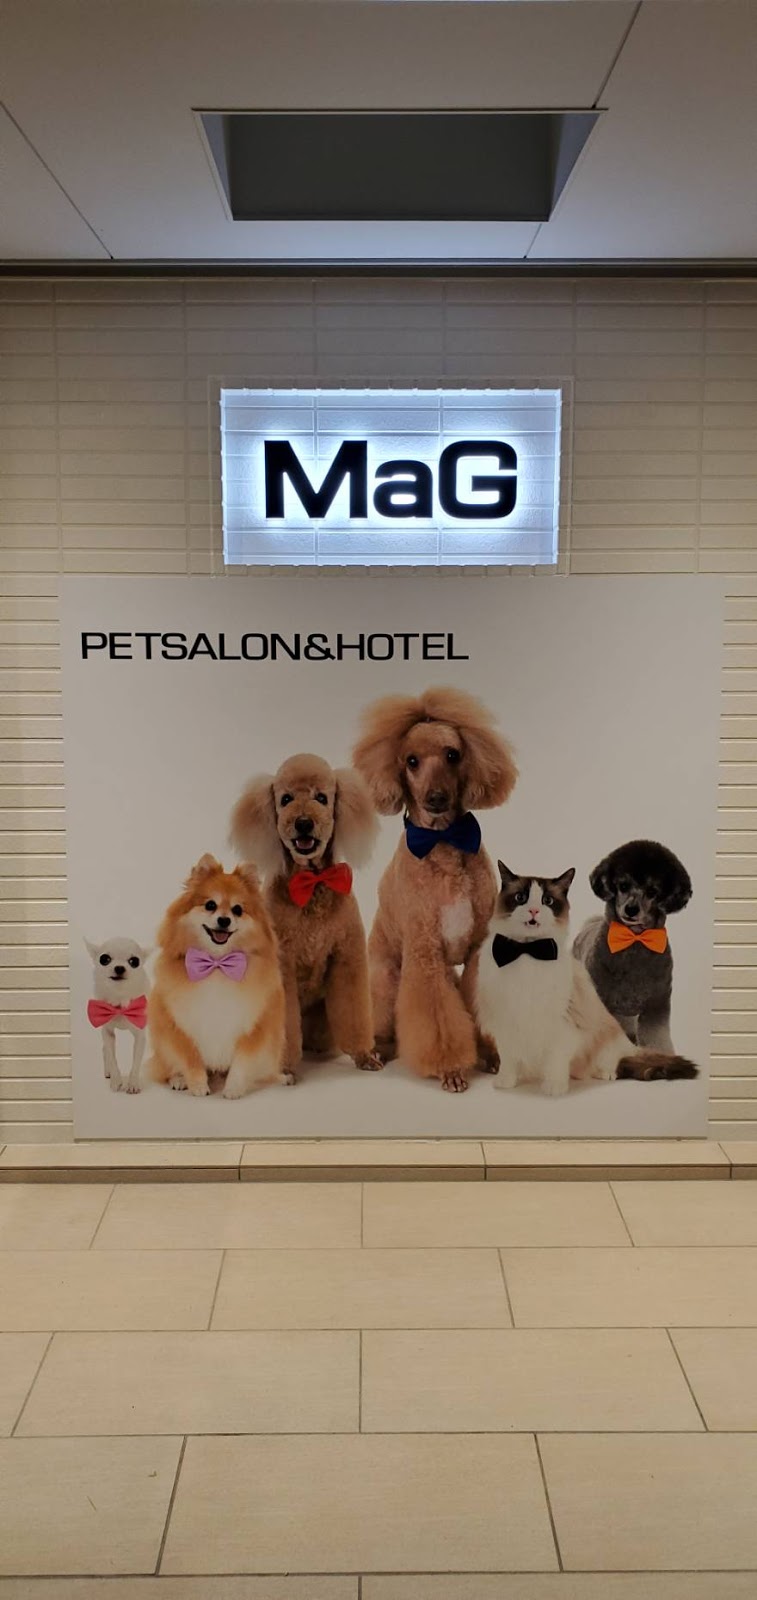 Pet Salon & Hotel MaG 大阪市北区 天六 トリミングサロン ペットホテル